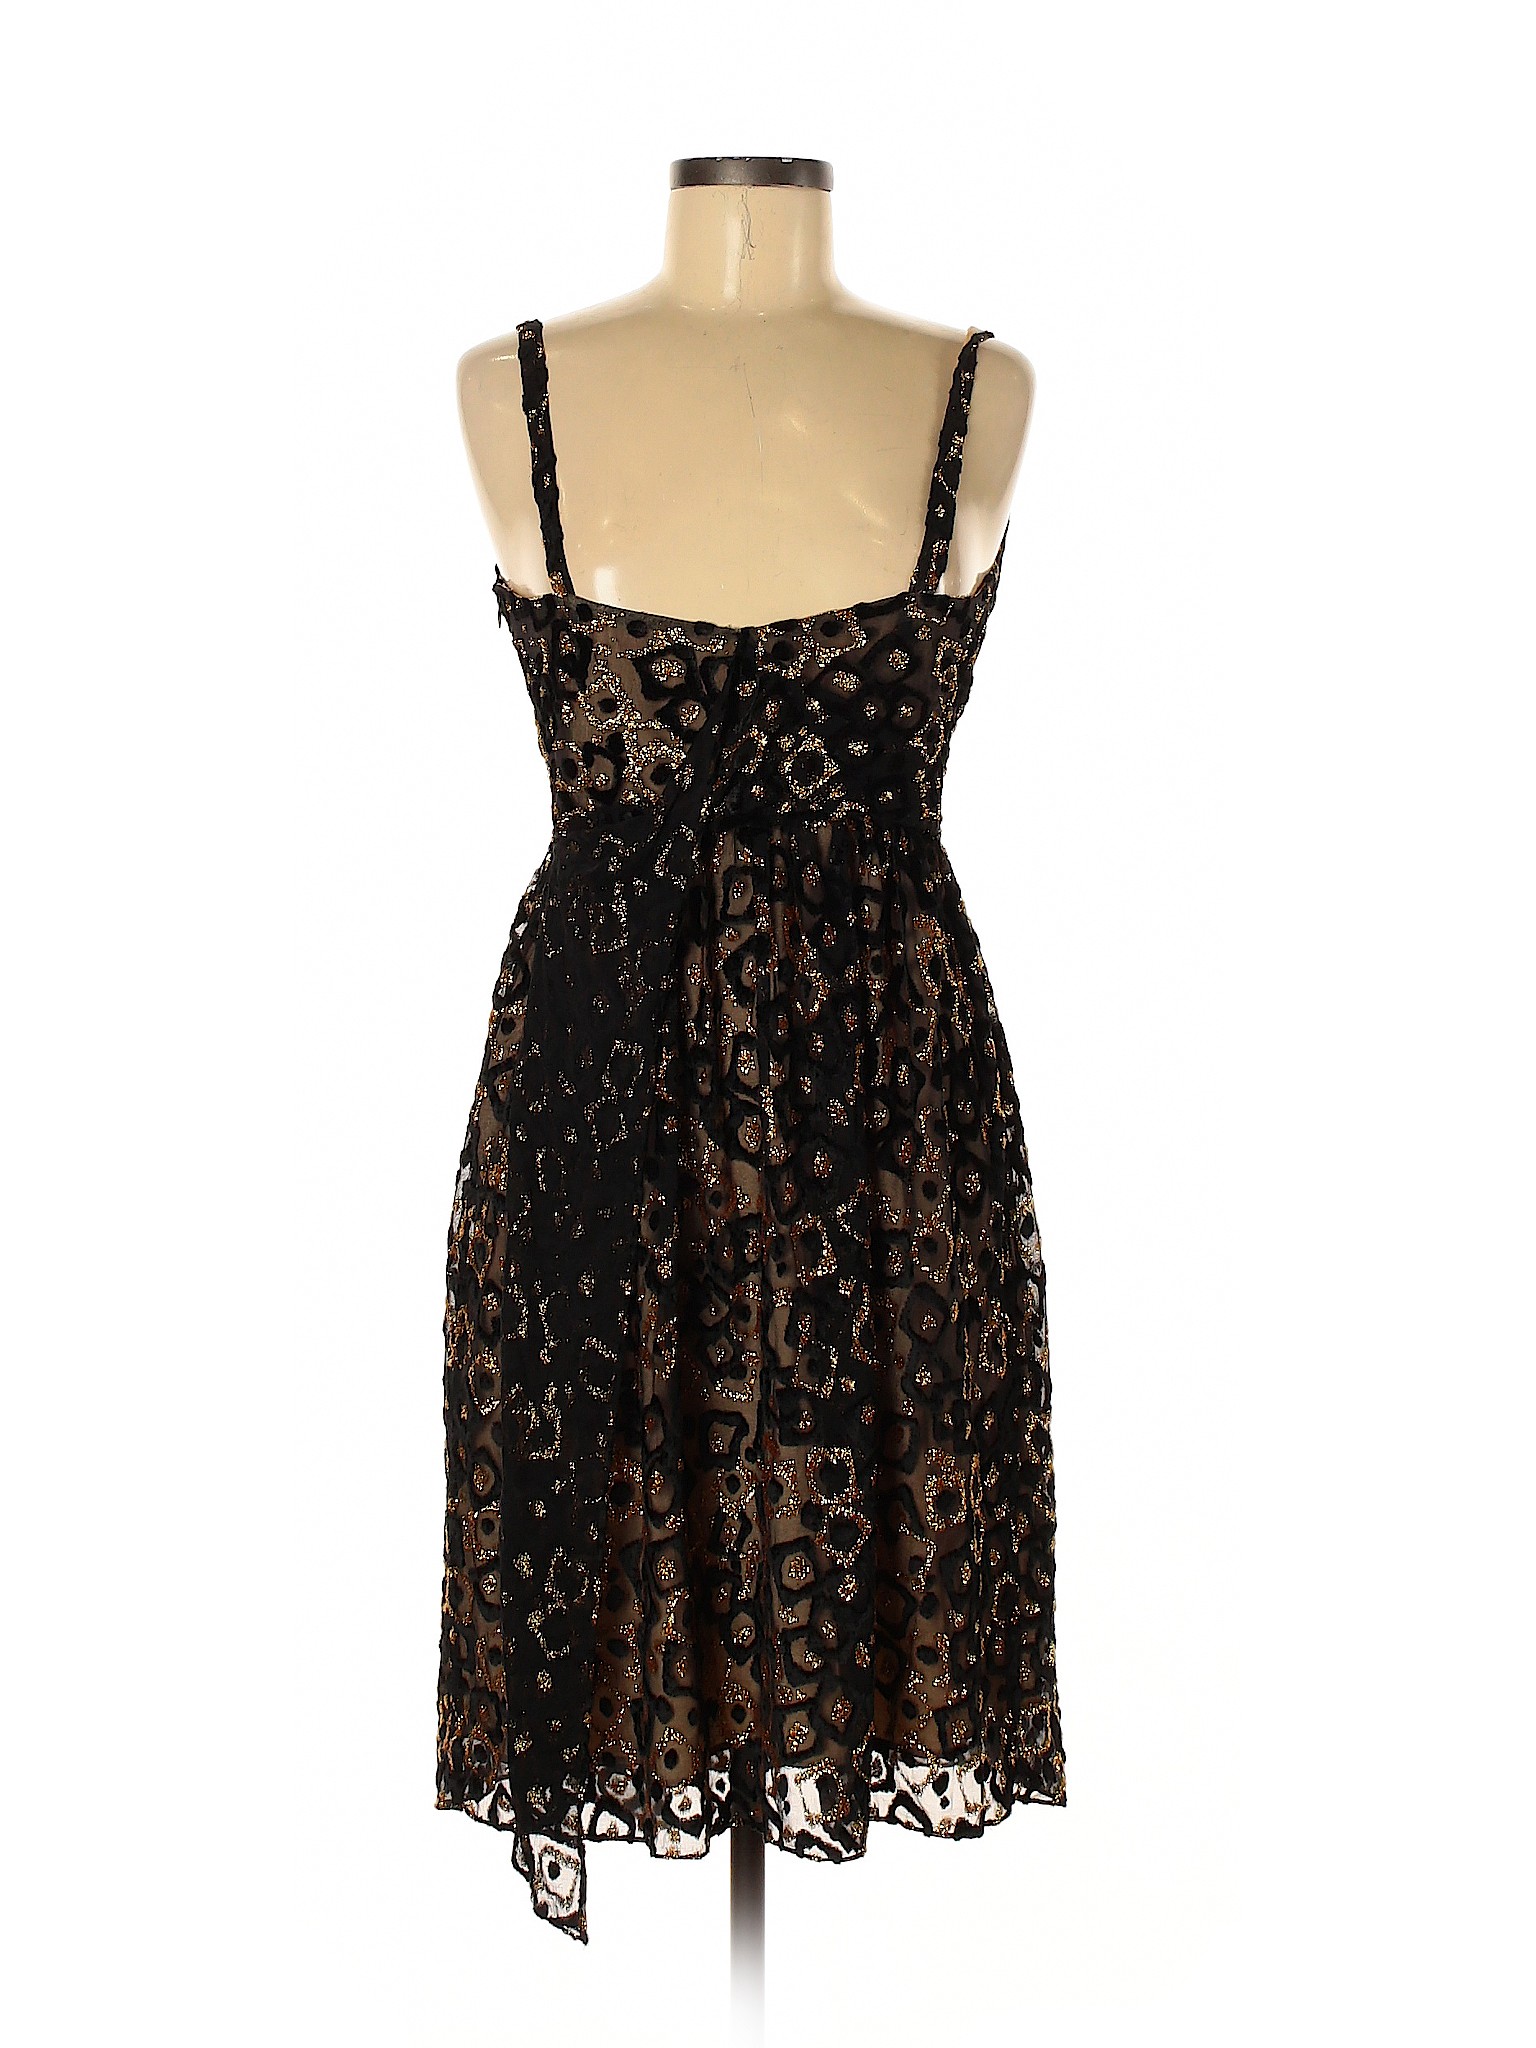 Milly Women Black Cocktail Dress 6 | eBay